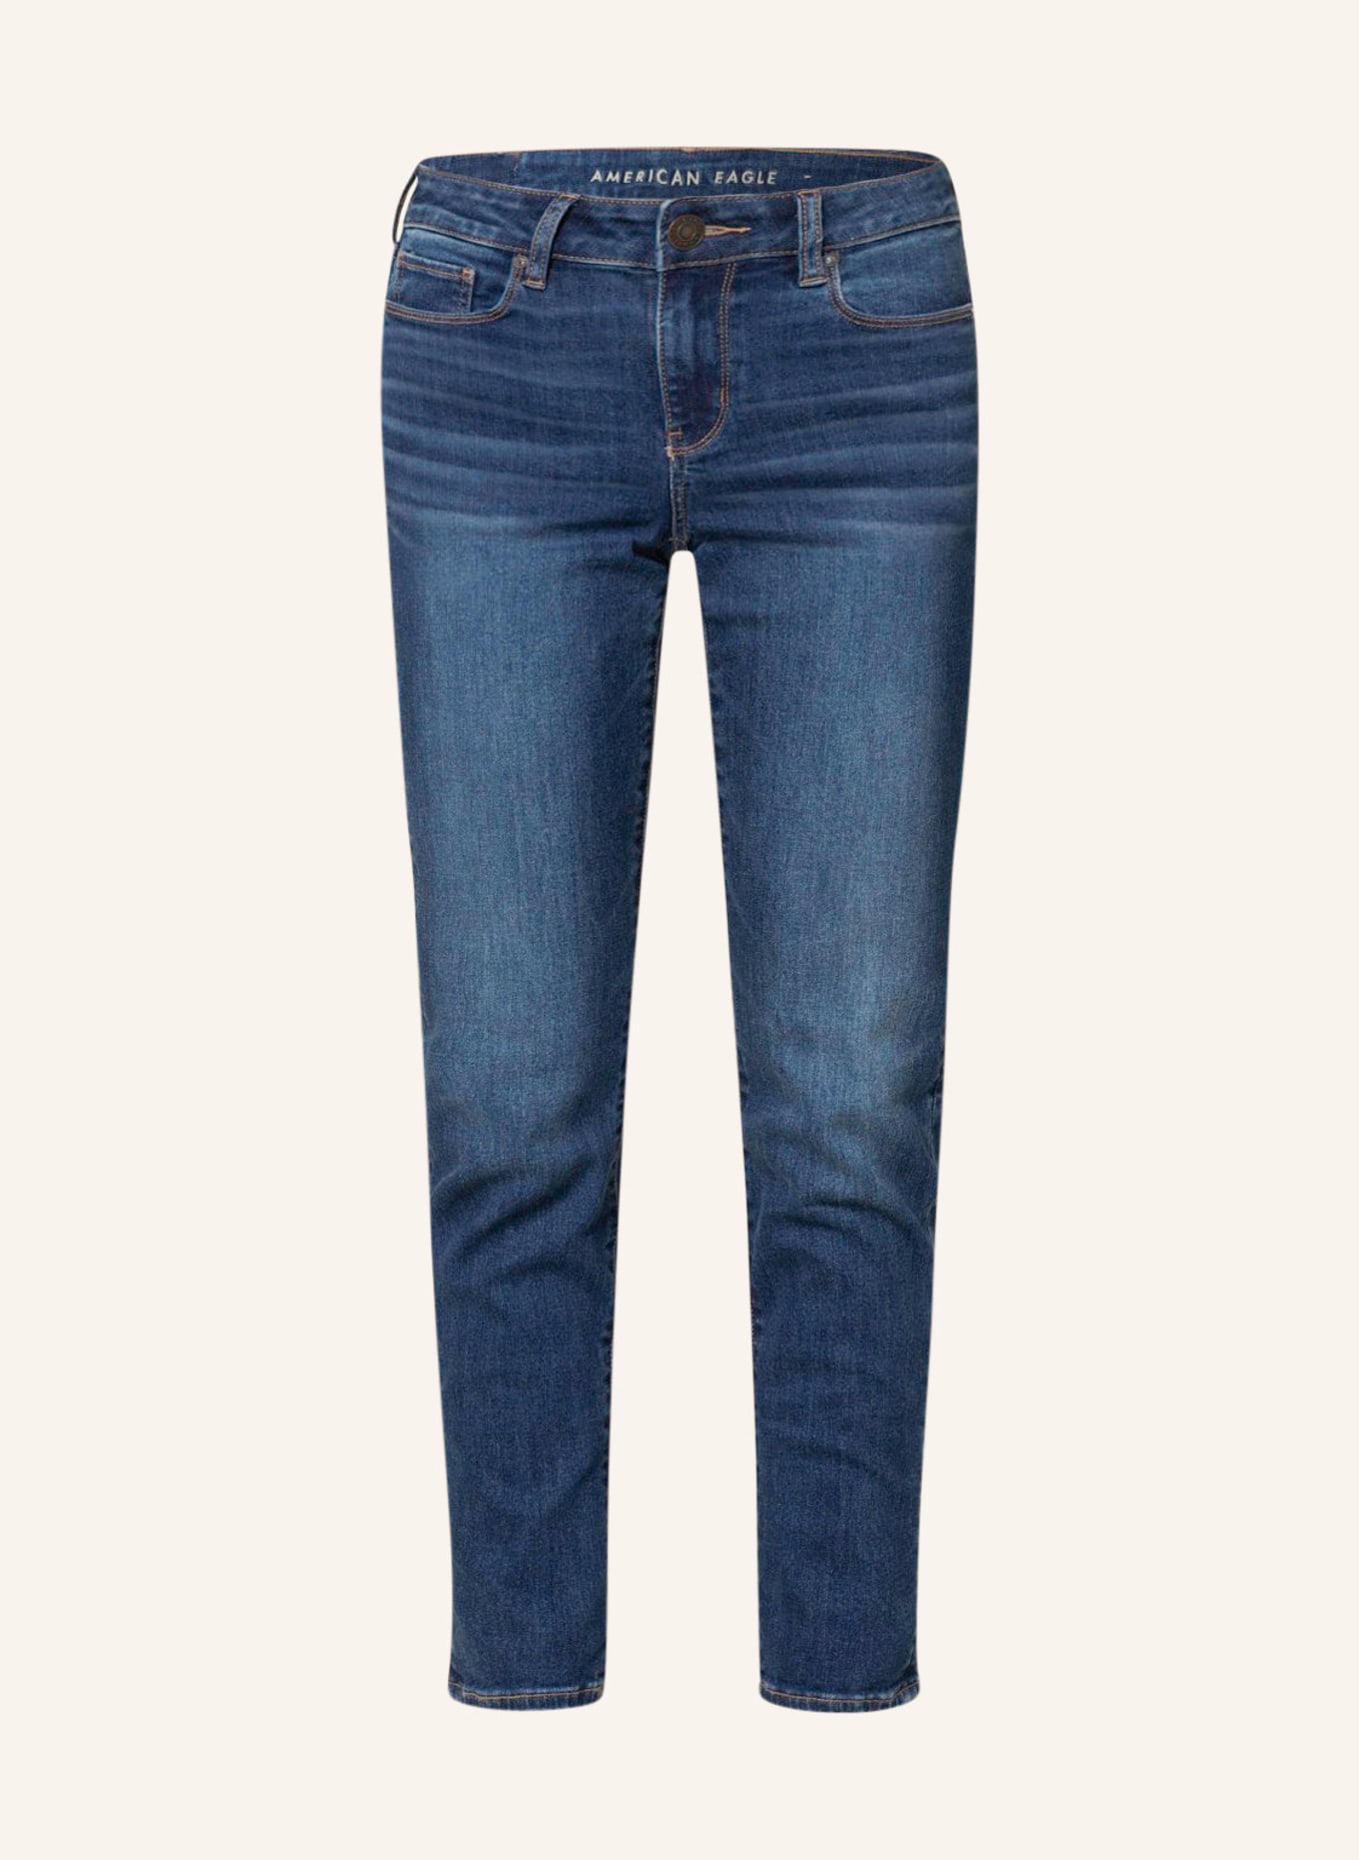 AMERICAN EAGLE Skinny Jeans, Farbe: 334 DEEP INDIGO(Bild null)